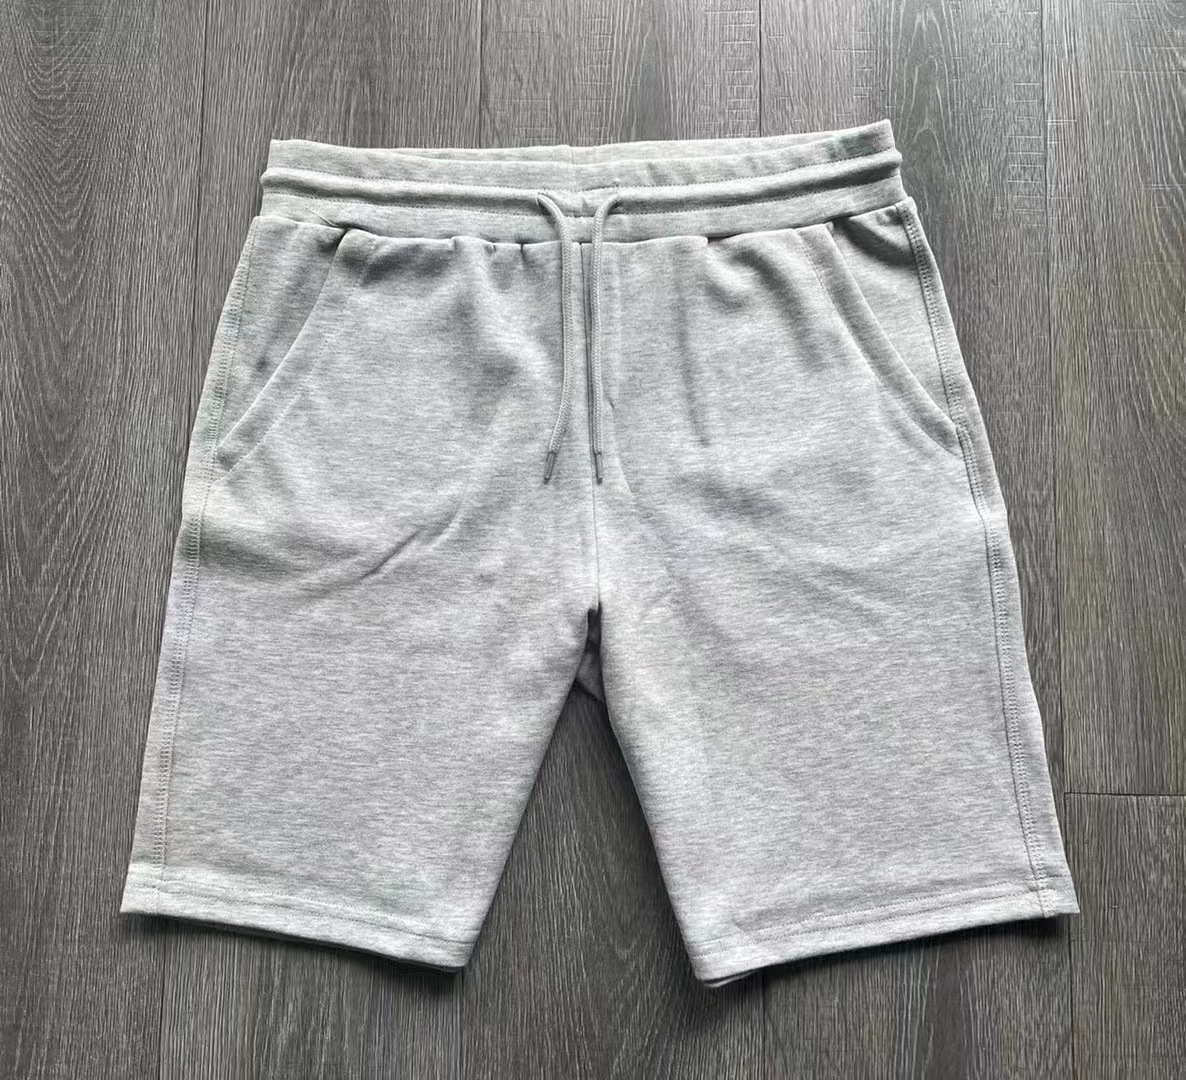 Stockpapa Overrun Branded Apparel 32°, Men\'s Spandex Knit Shorts